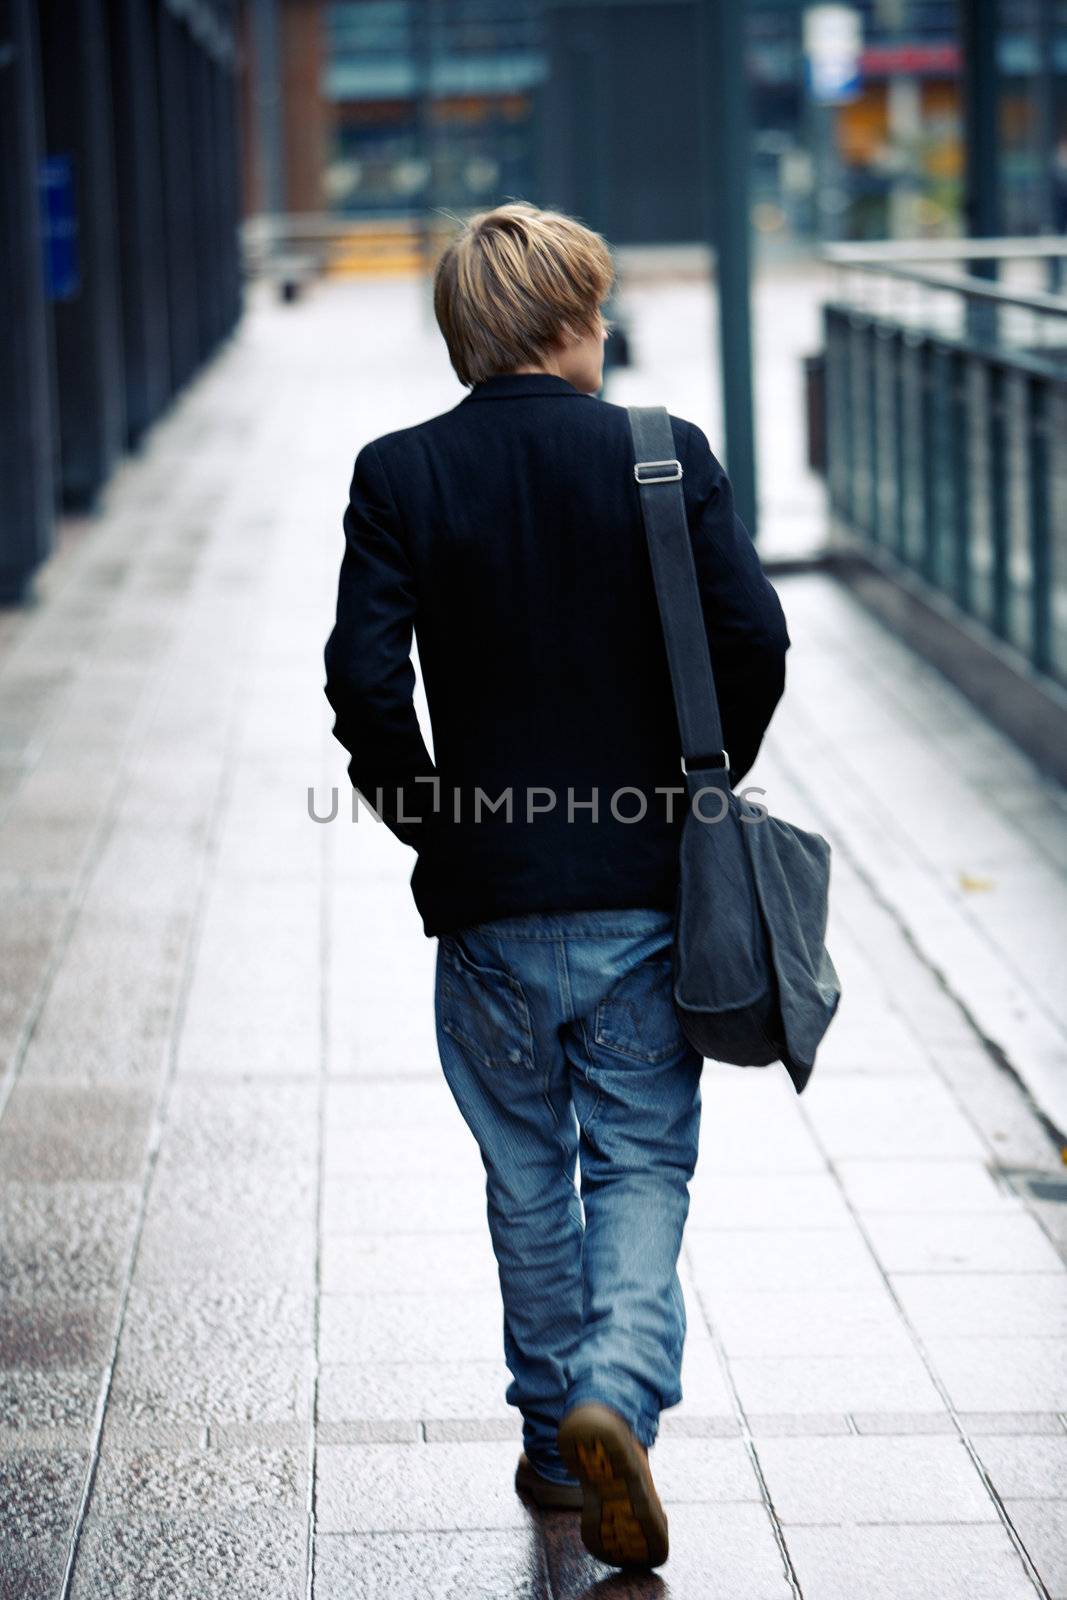 Teenage boy walking away from camera in street, motion blur